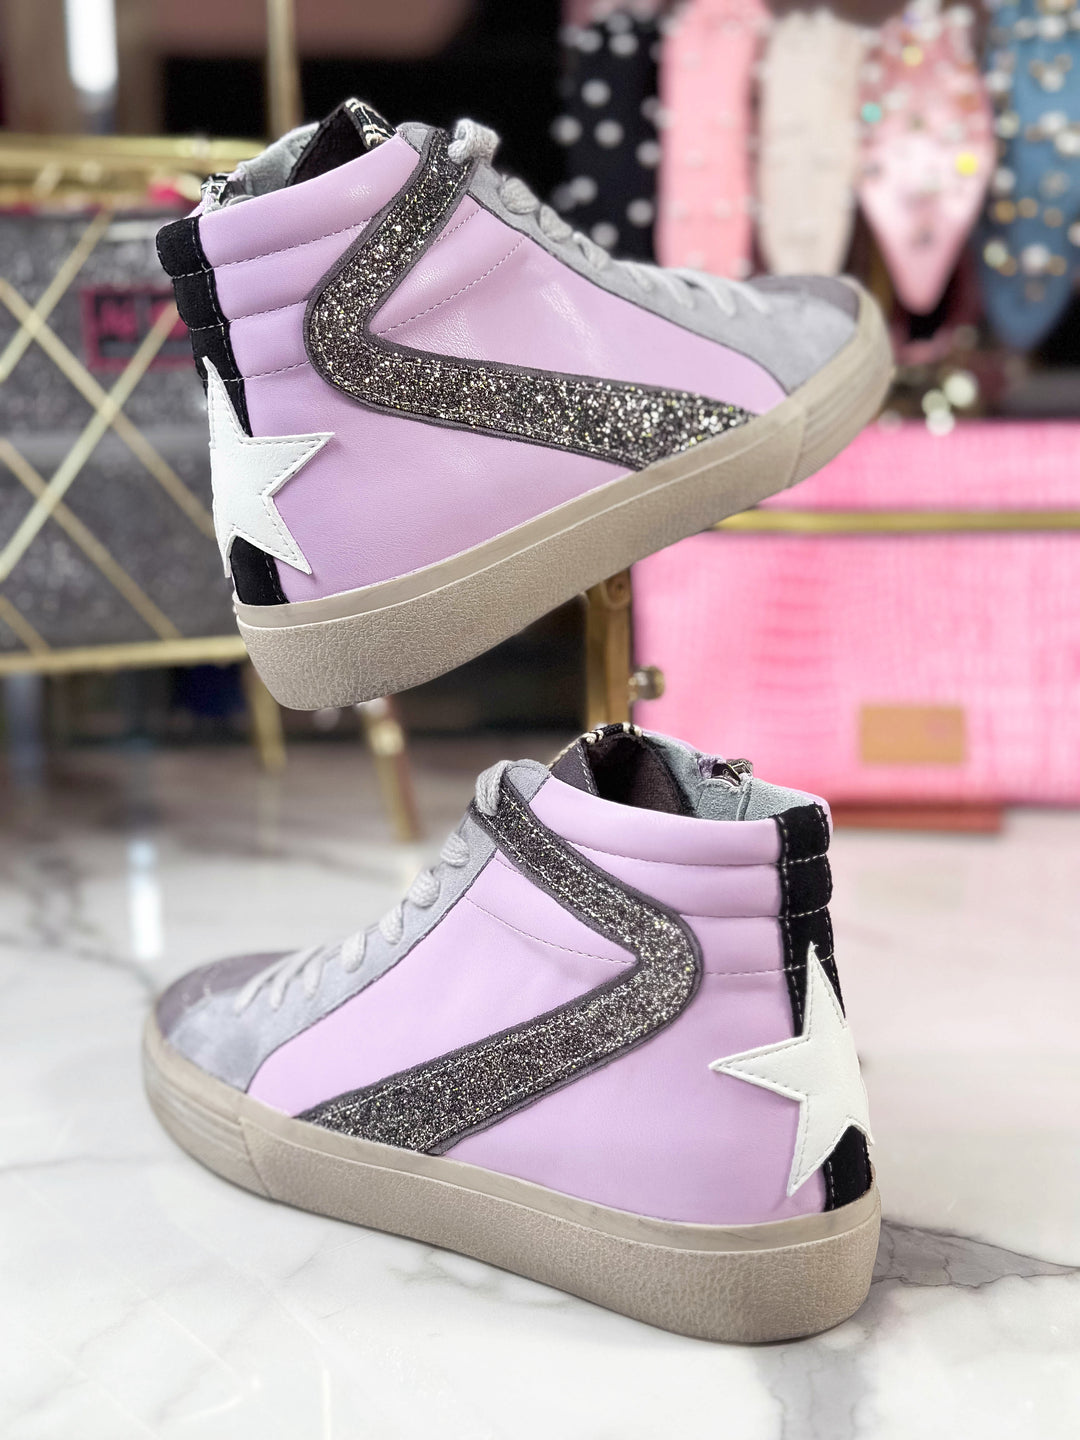 Shu Shop - Rooney Lilac Hi Top Sneakers